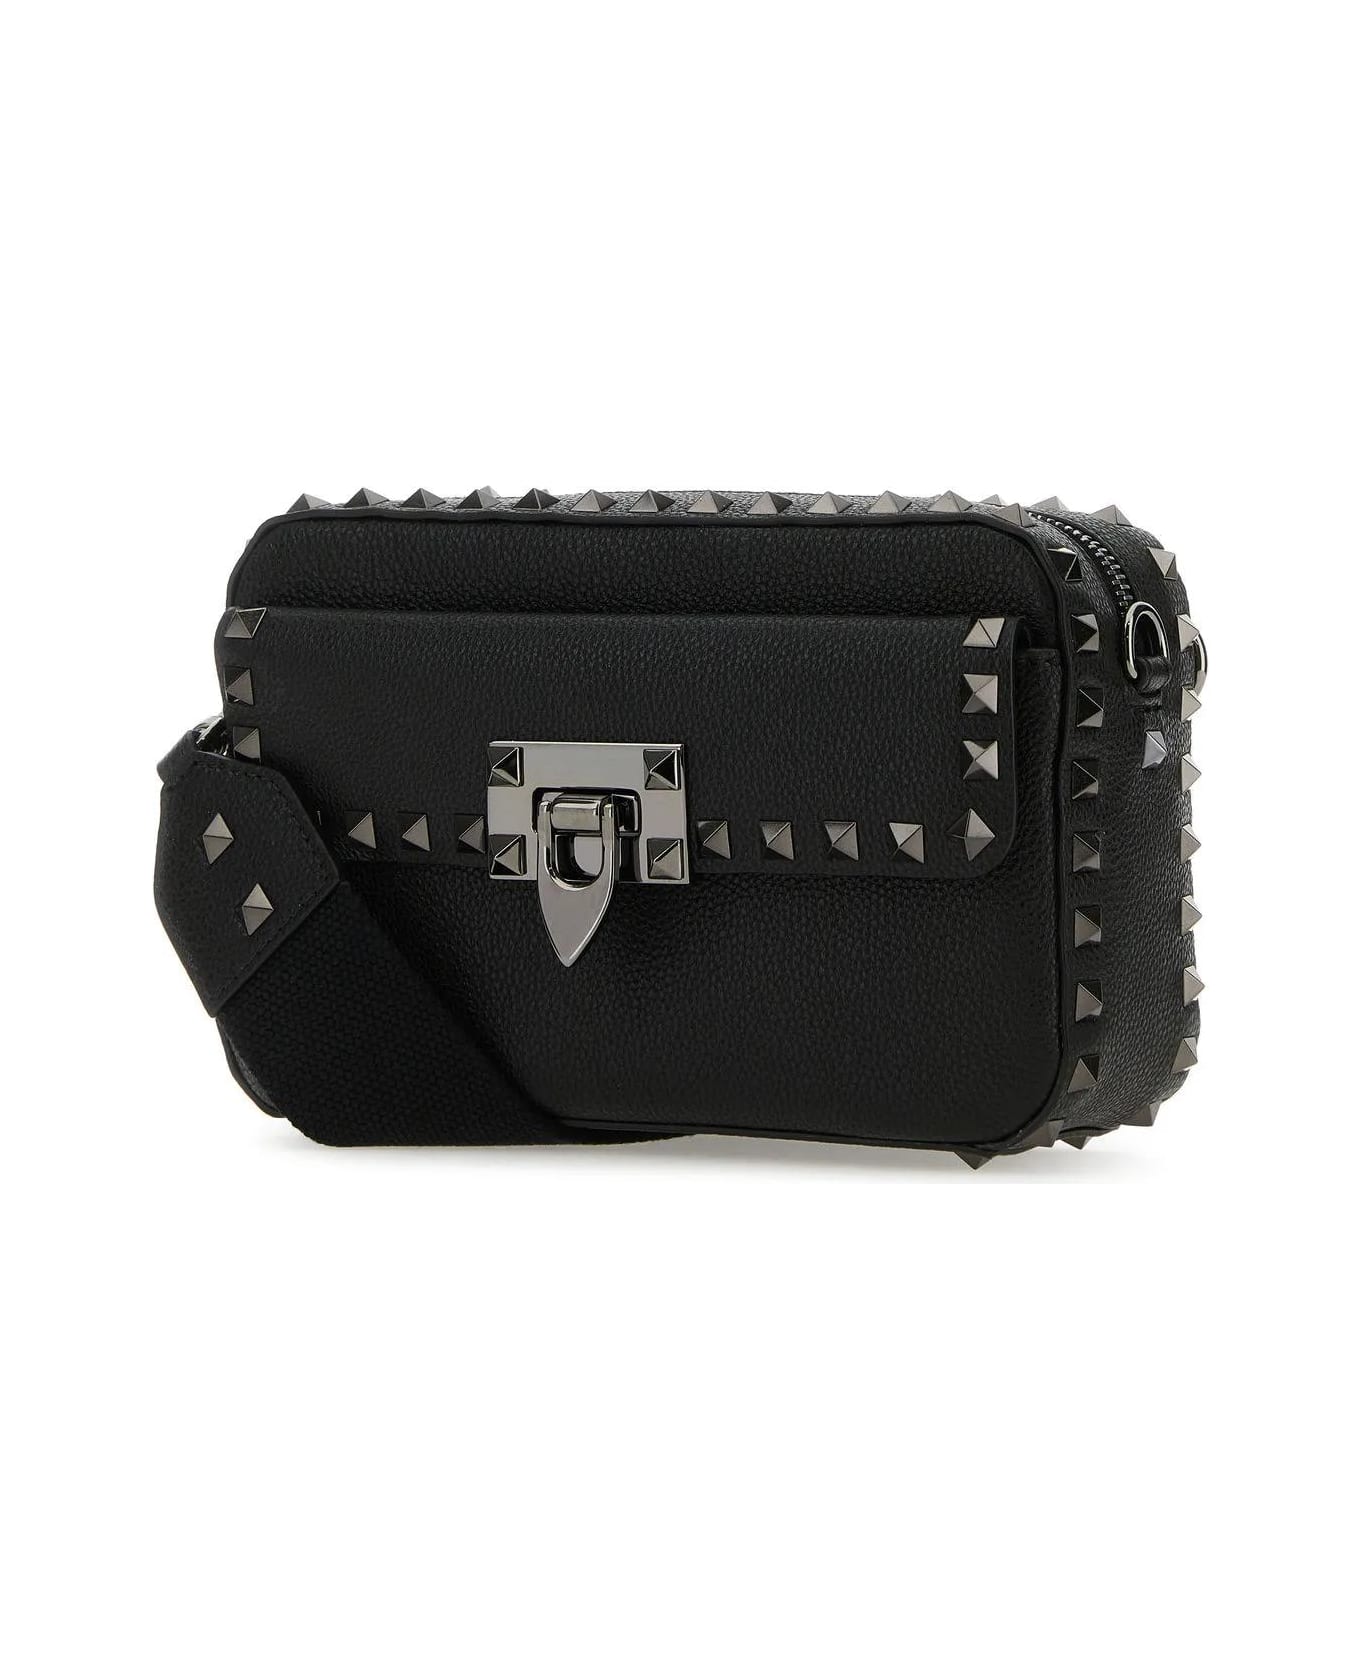 Valentino Garavani Black Leather Rockstud Crossbody Bag